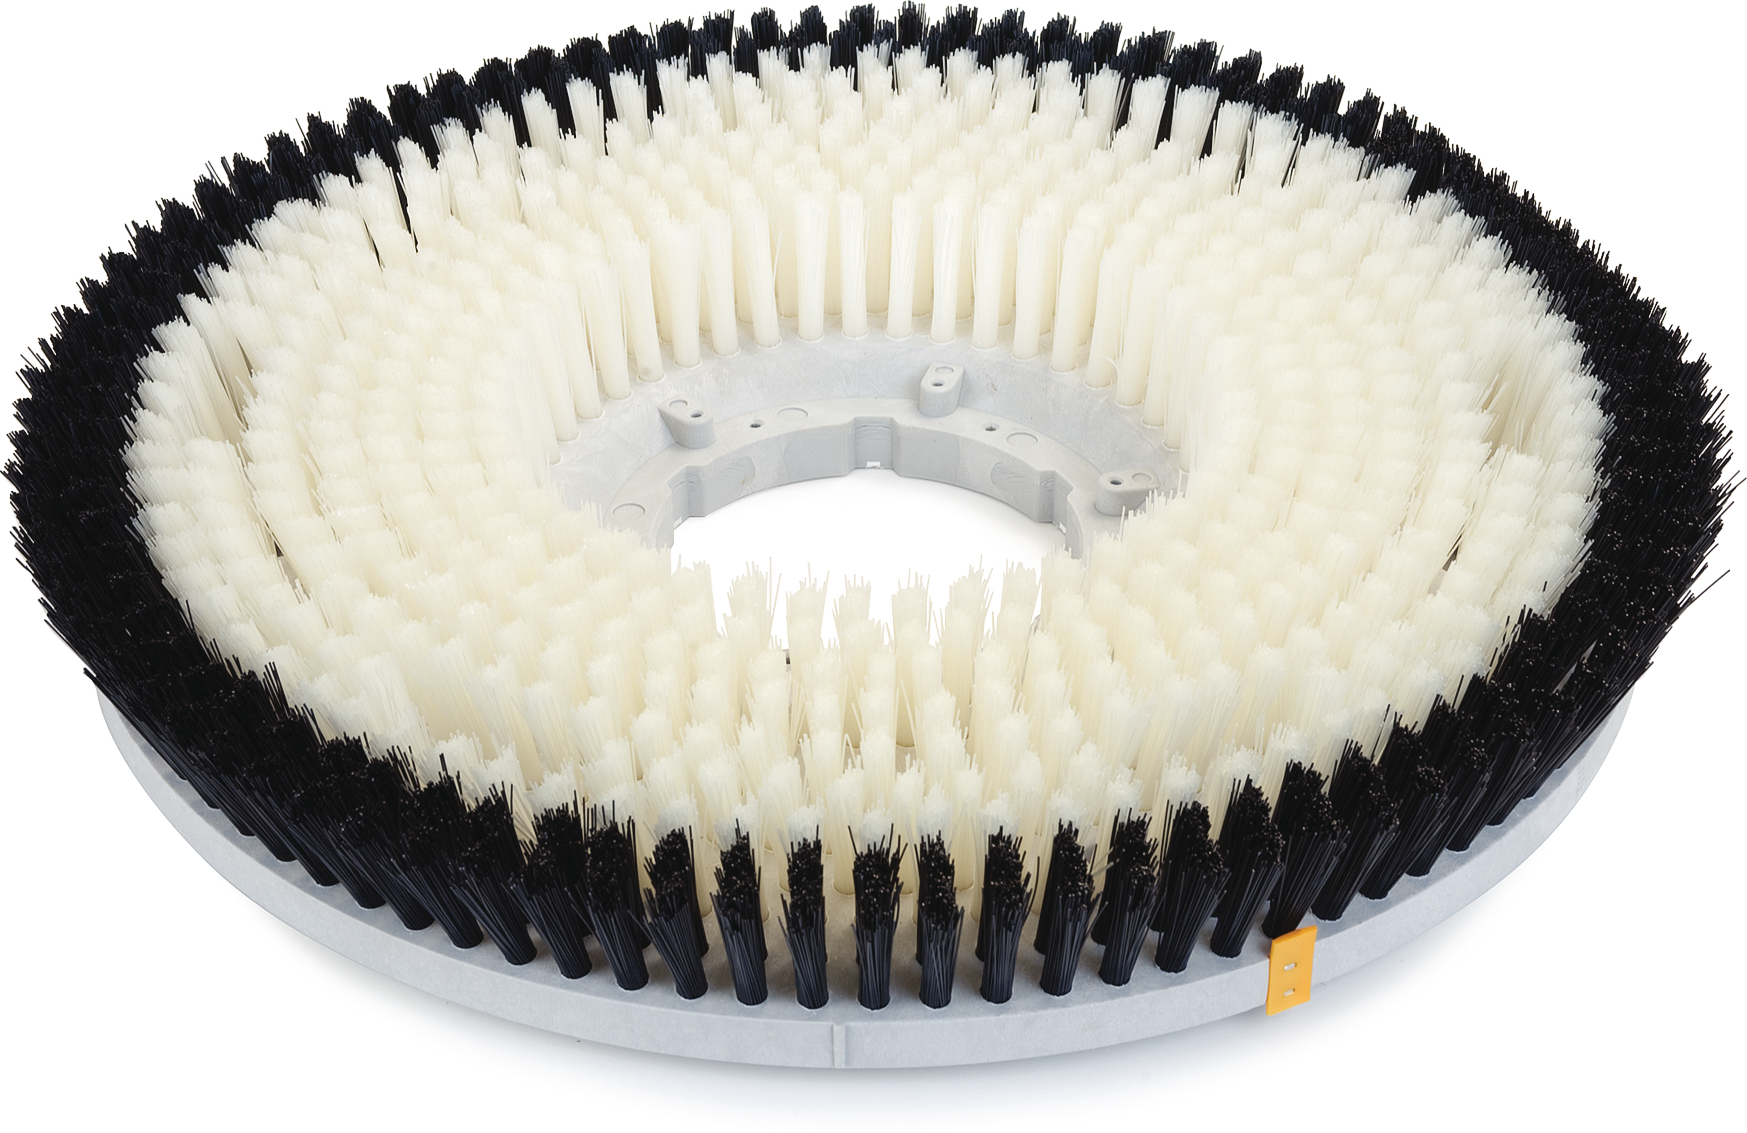 Colortech White-Black Karpet Kare Nylon Brush 17 - White-Black